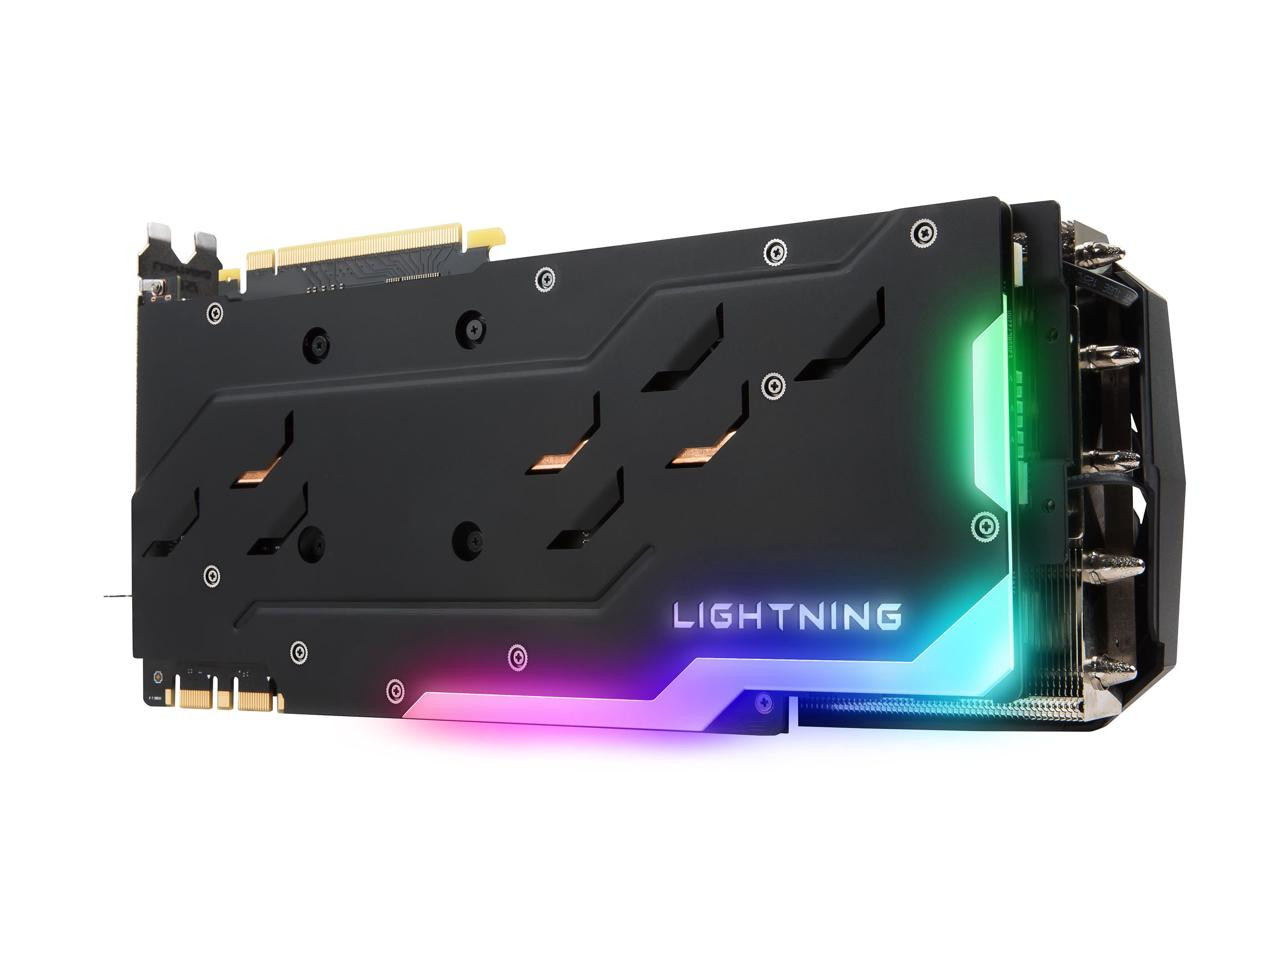 MSI GTX 1080 Ti Lightning X и Z уже доступны на Newegg по $859/869